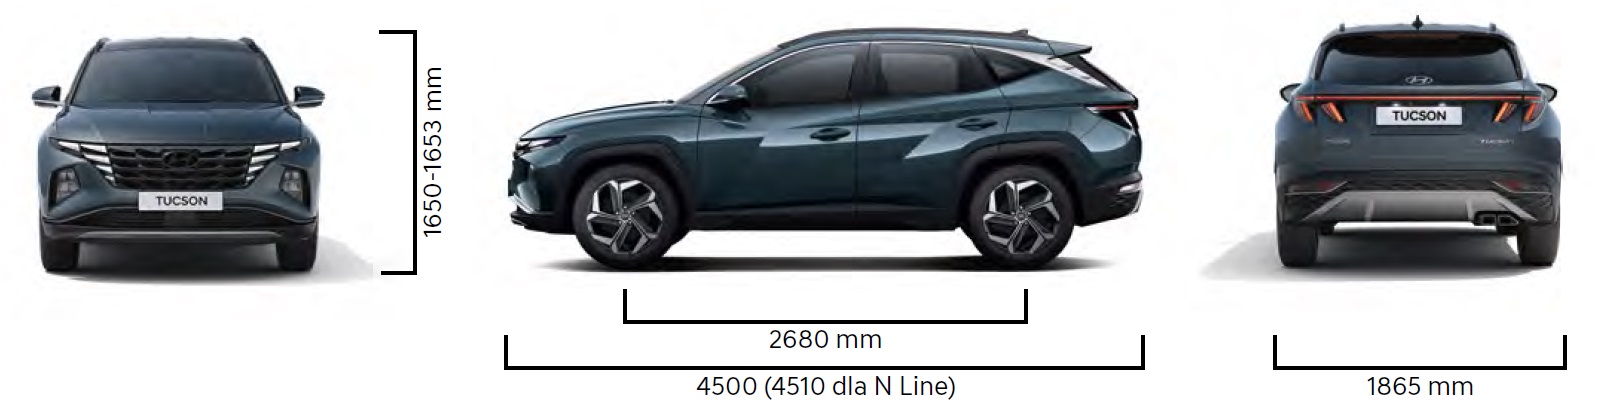 nowy Hyundai Tucson - wymiary